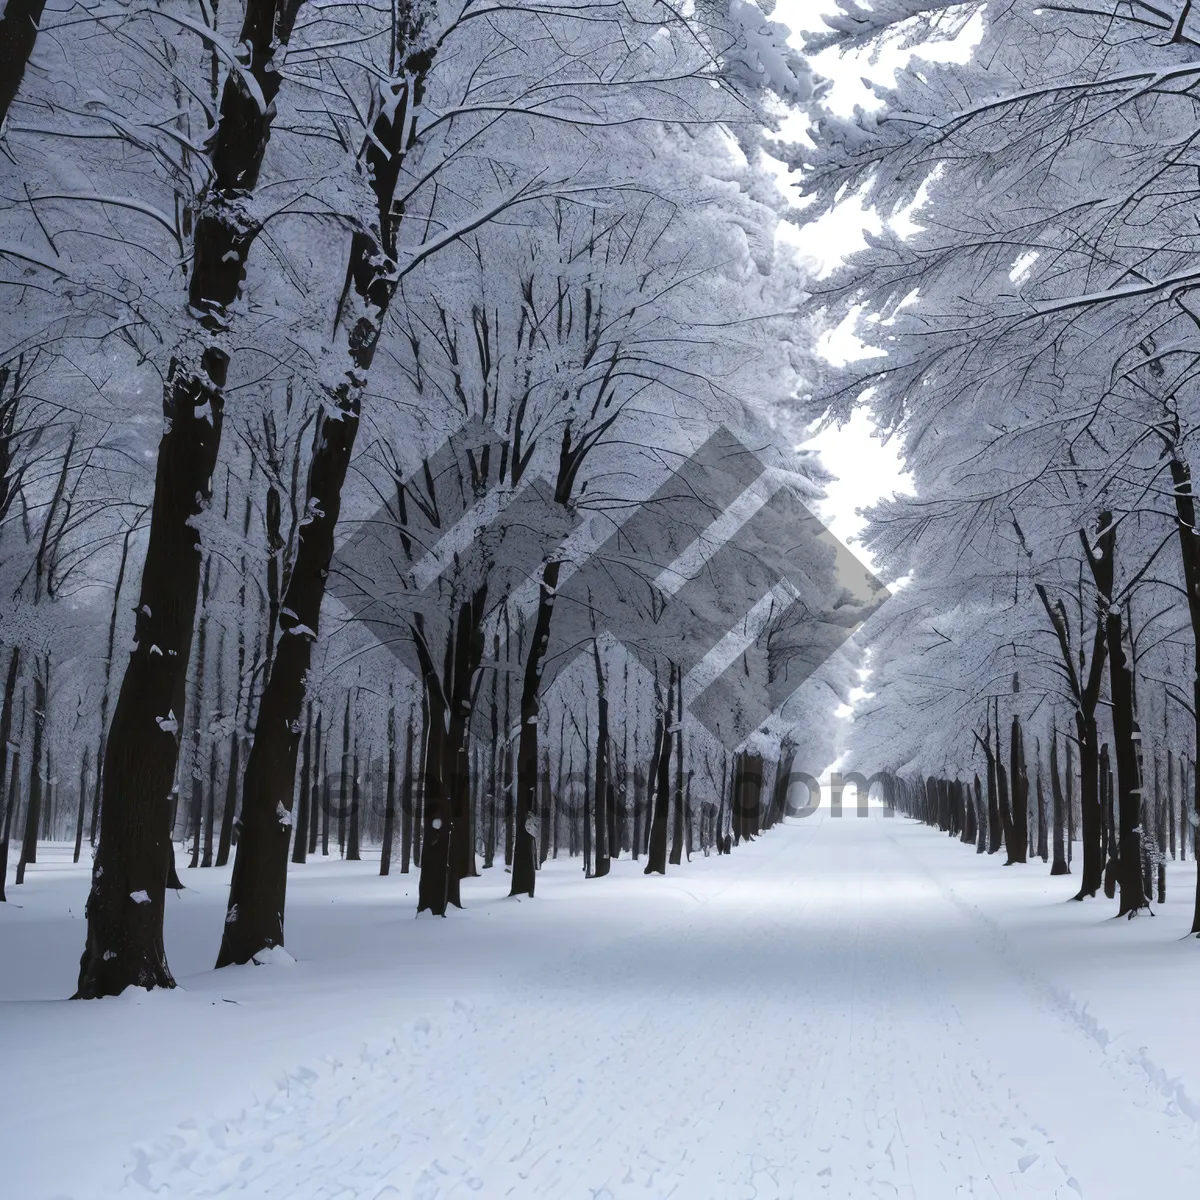 Picture of Winter Wonderland: Majestic Frozen Forest Landscape